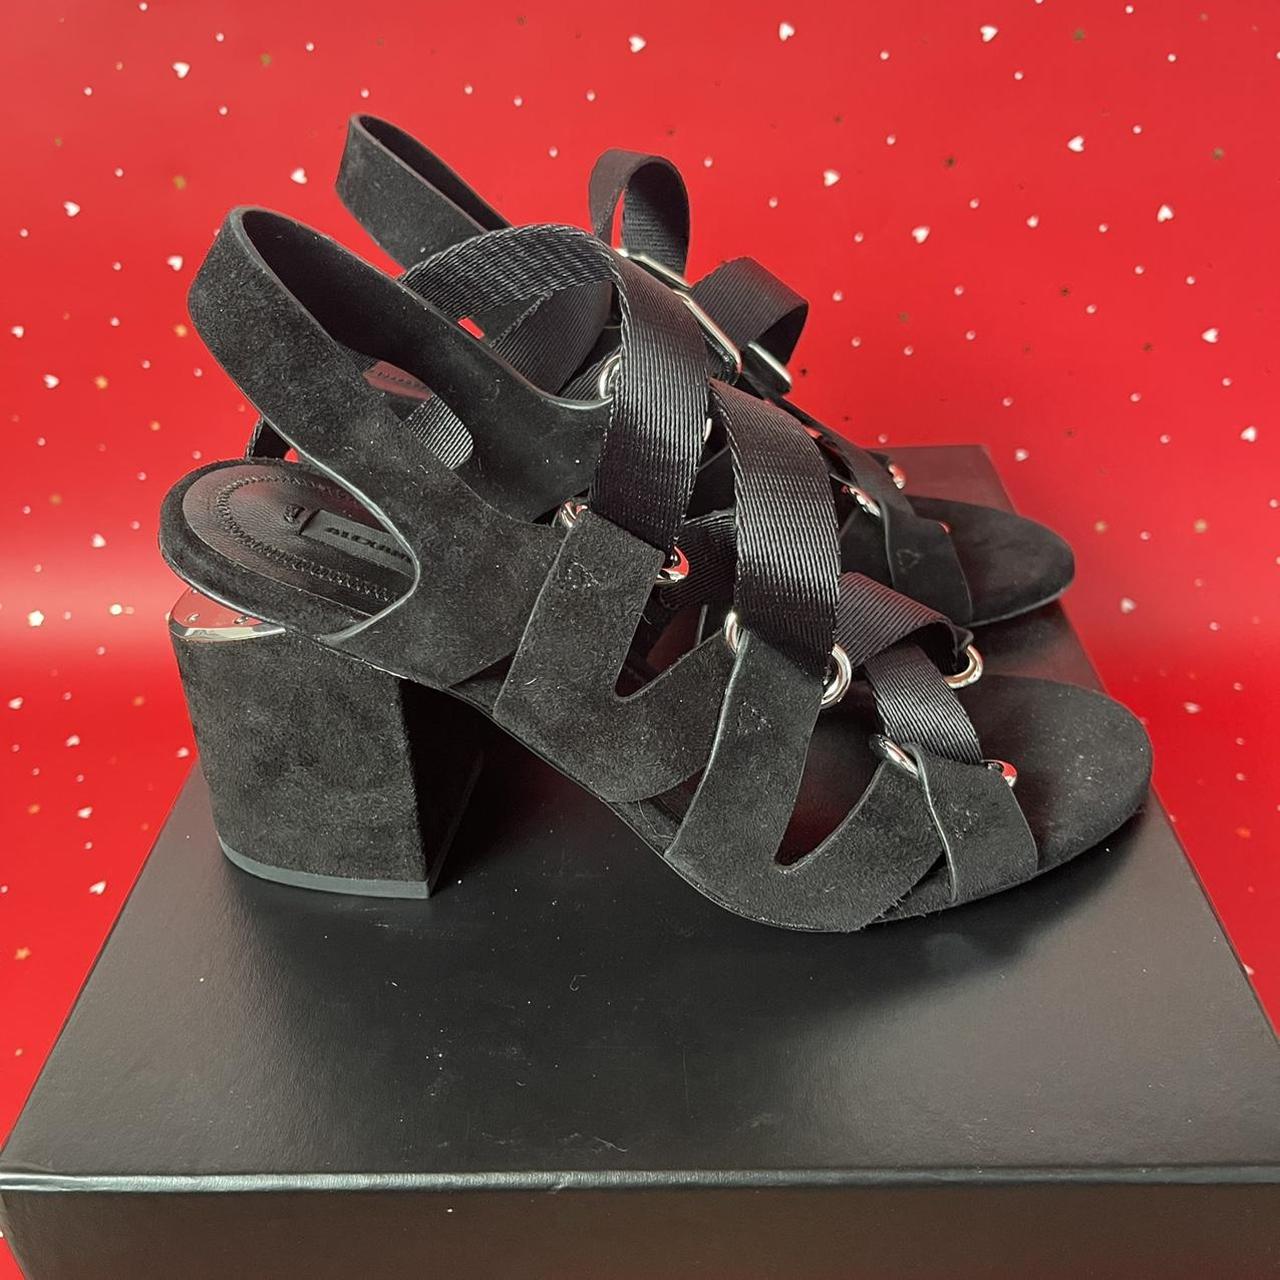 Alexander Wang Designer Shoe Box with Dust Bag  - Depop